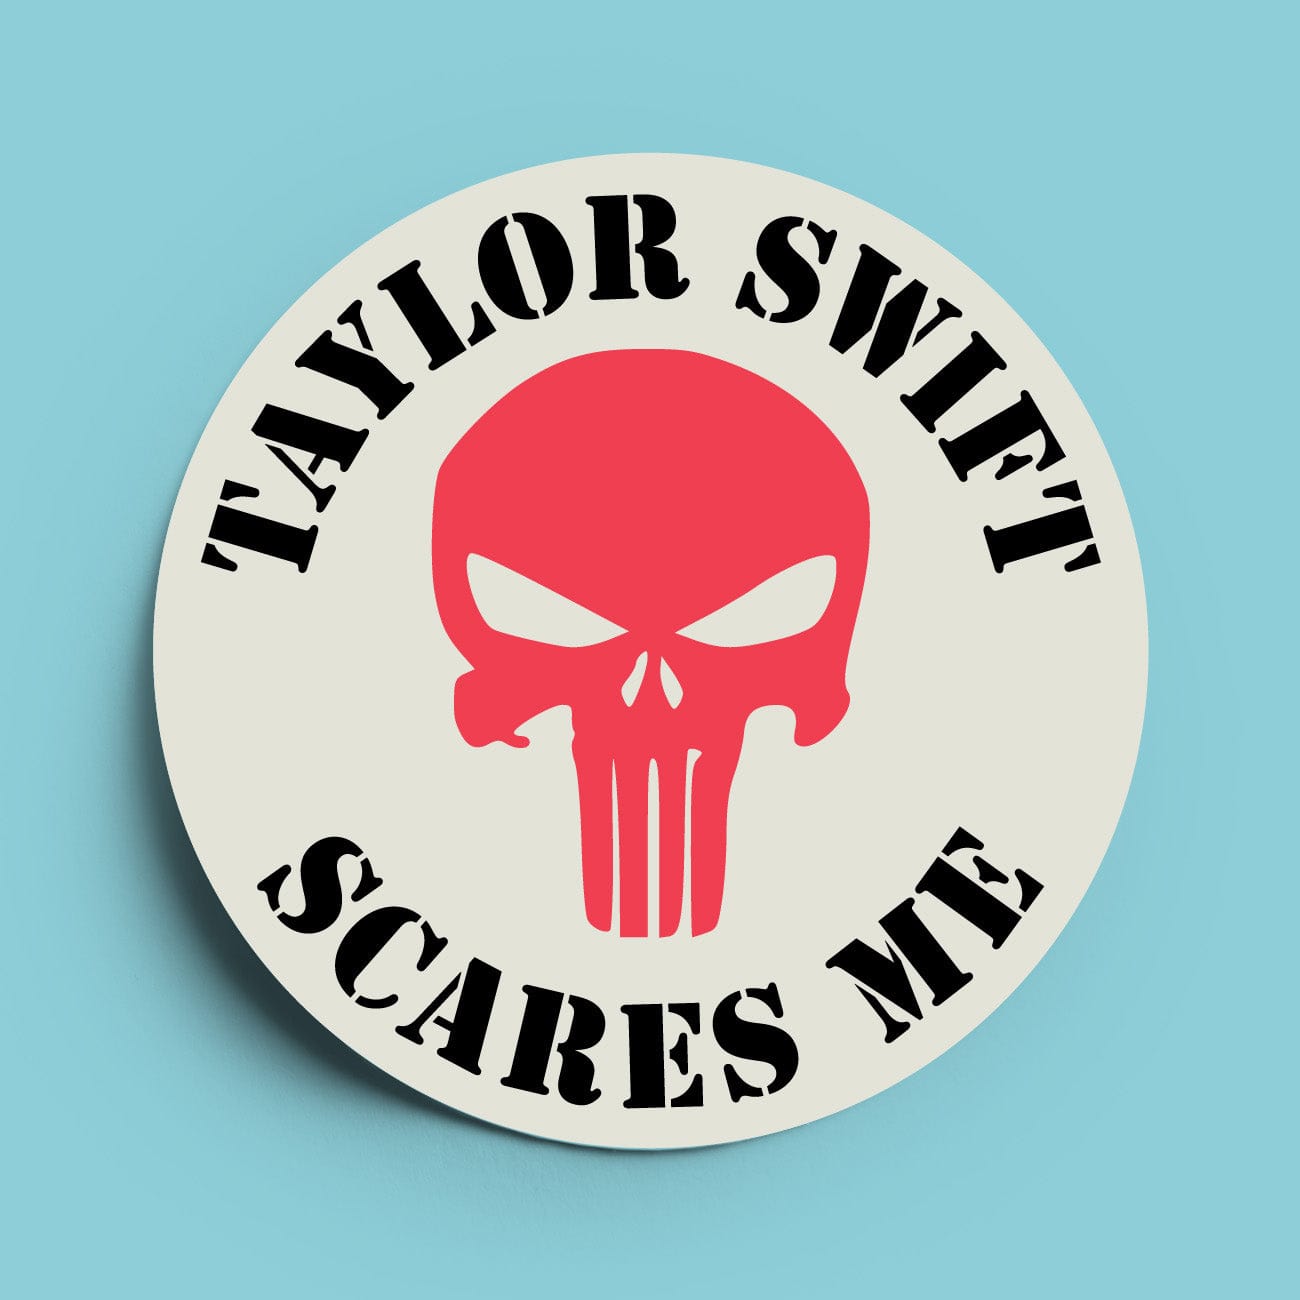 Taylor Swift Scares Me - Sticker